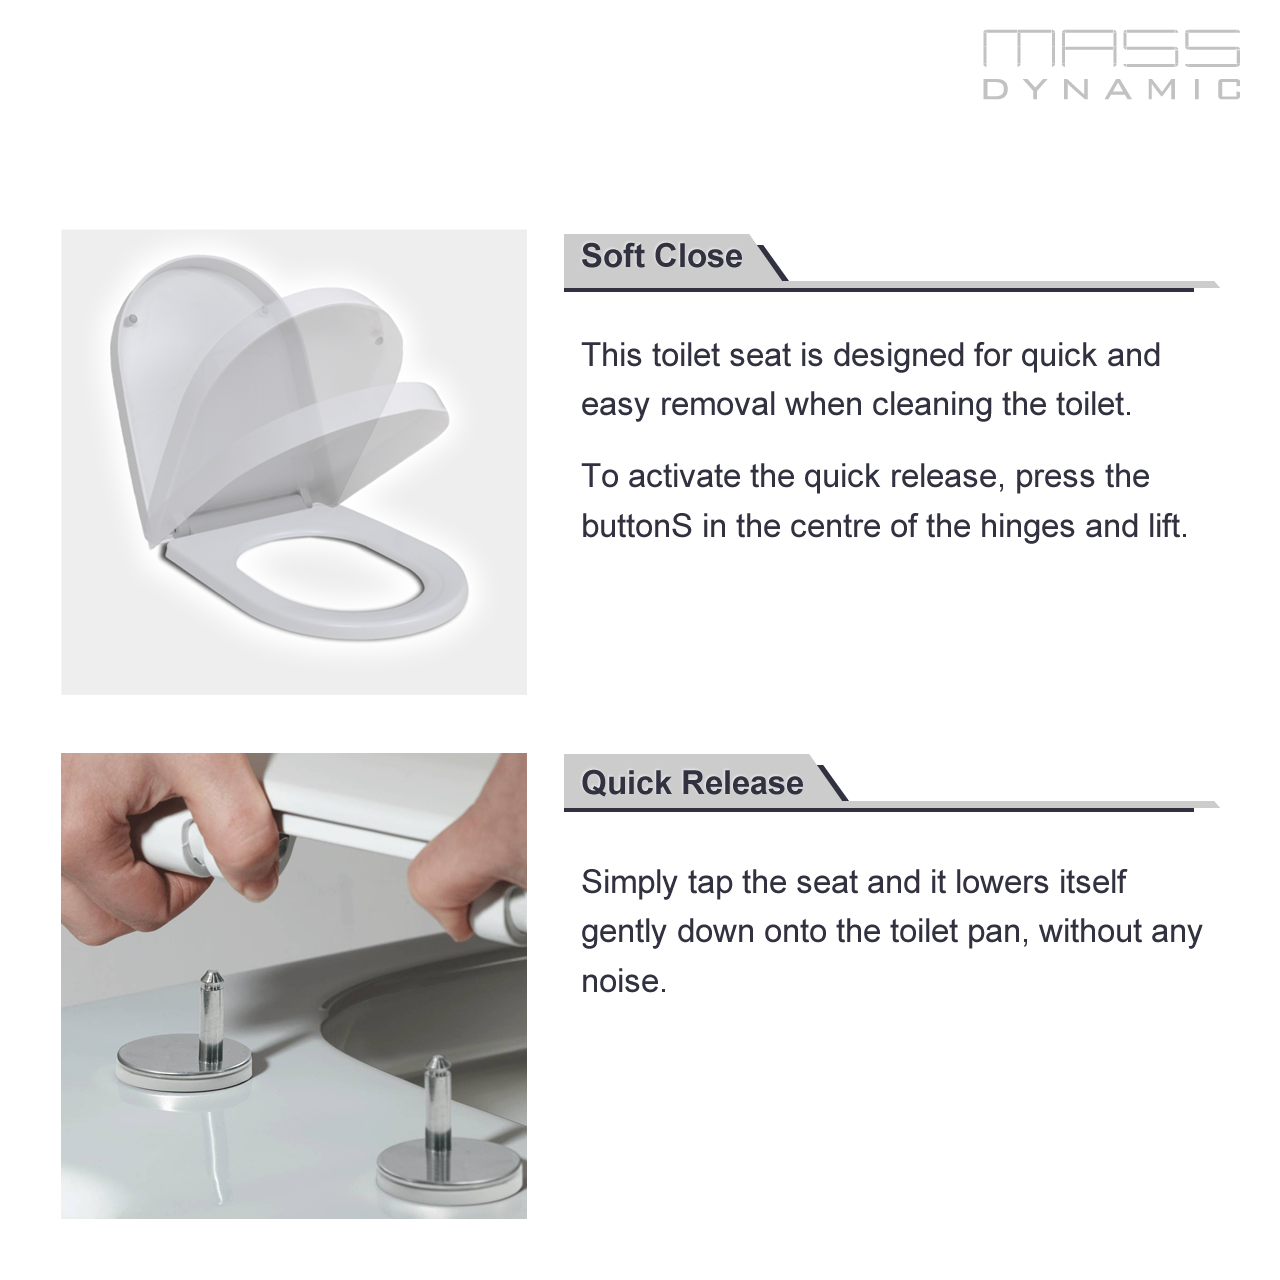 D-Shape Polypropylene Toilet Seat Soft-Close Mechanism with Quick Release Buttons